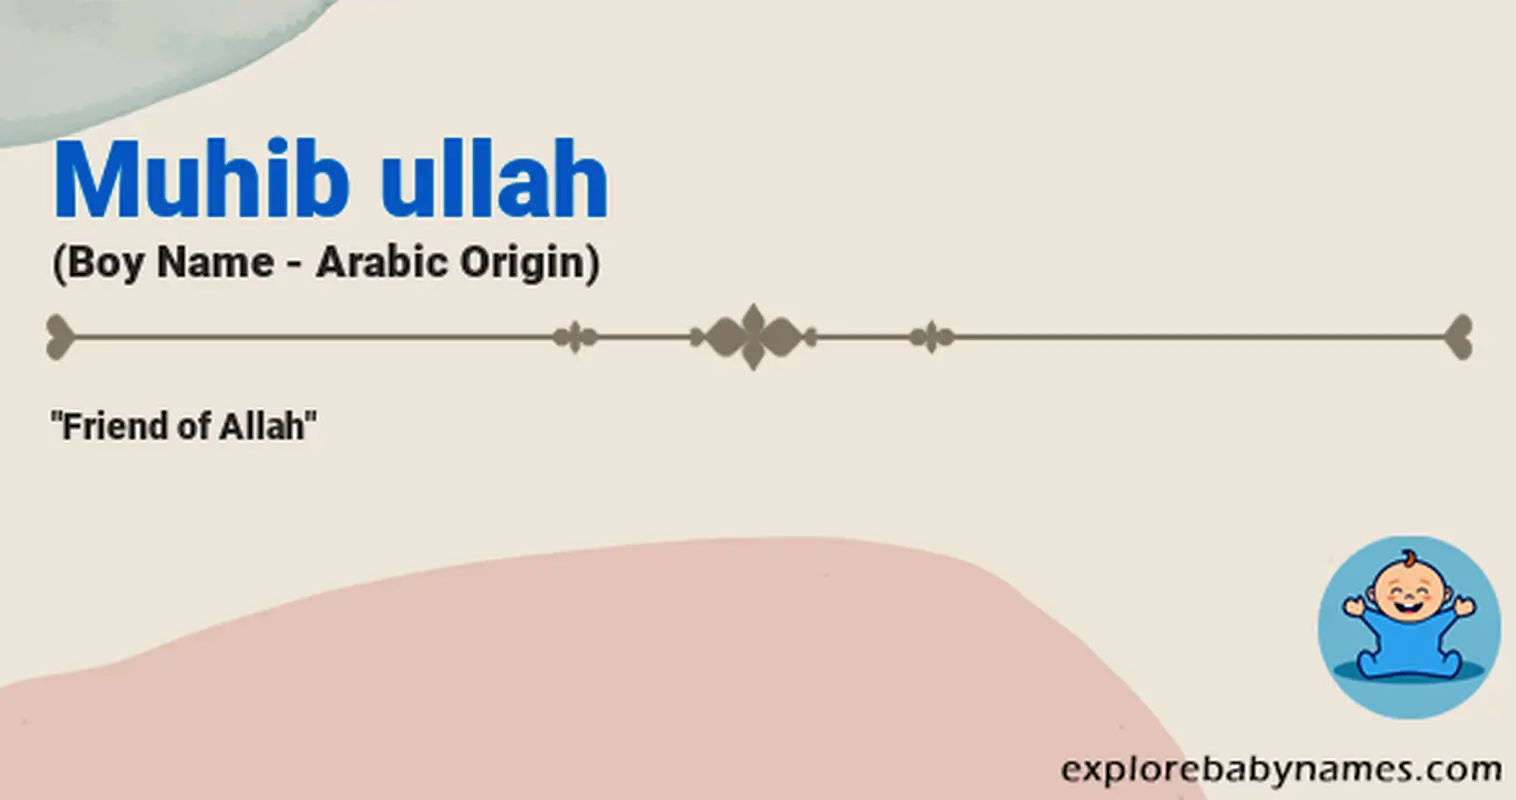 Meaning of Muhib ullah